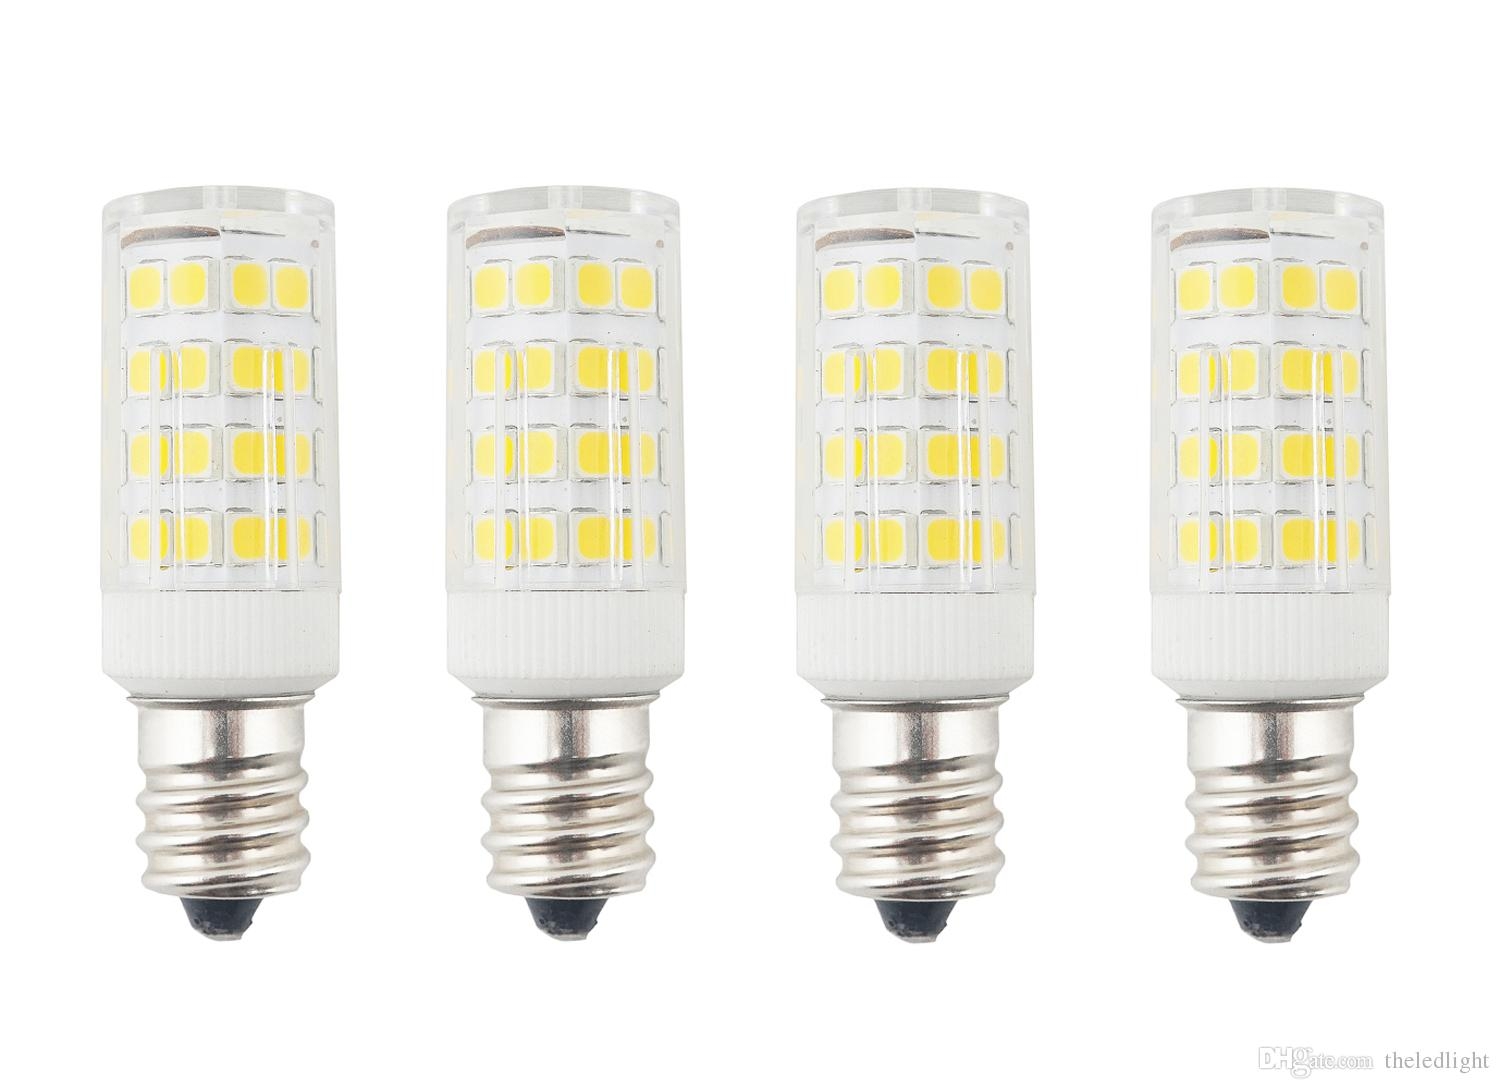 Permalink to Ceiling Fan Led Light Bulbs